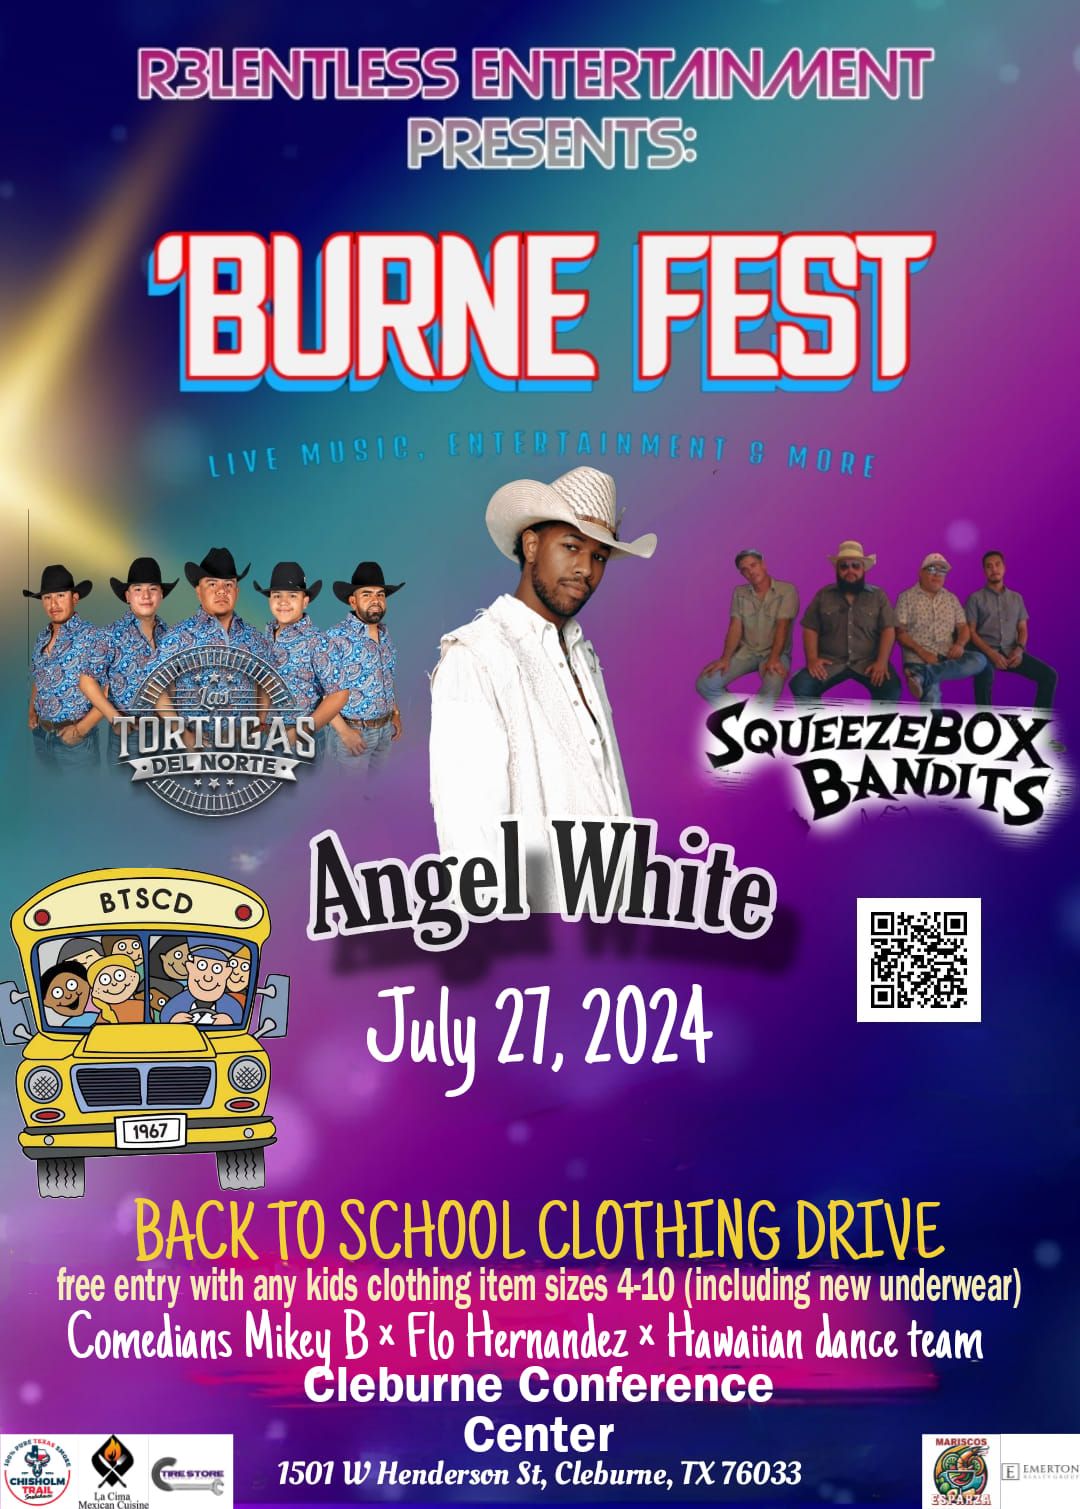 Burne Fest Back to school Clothing Drive